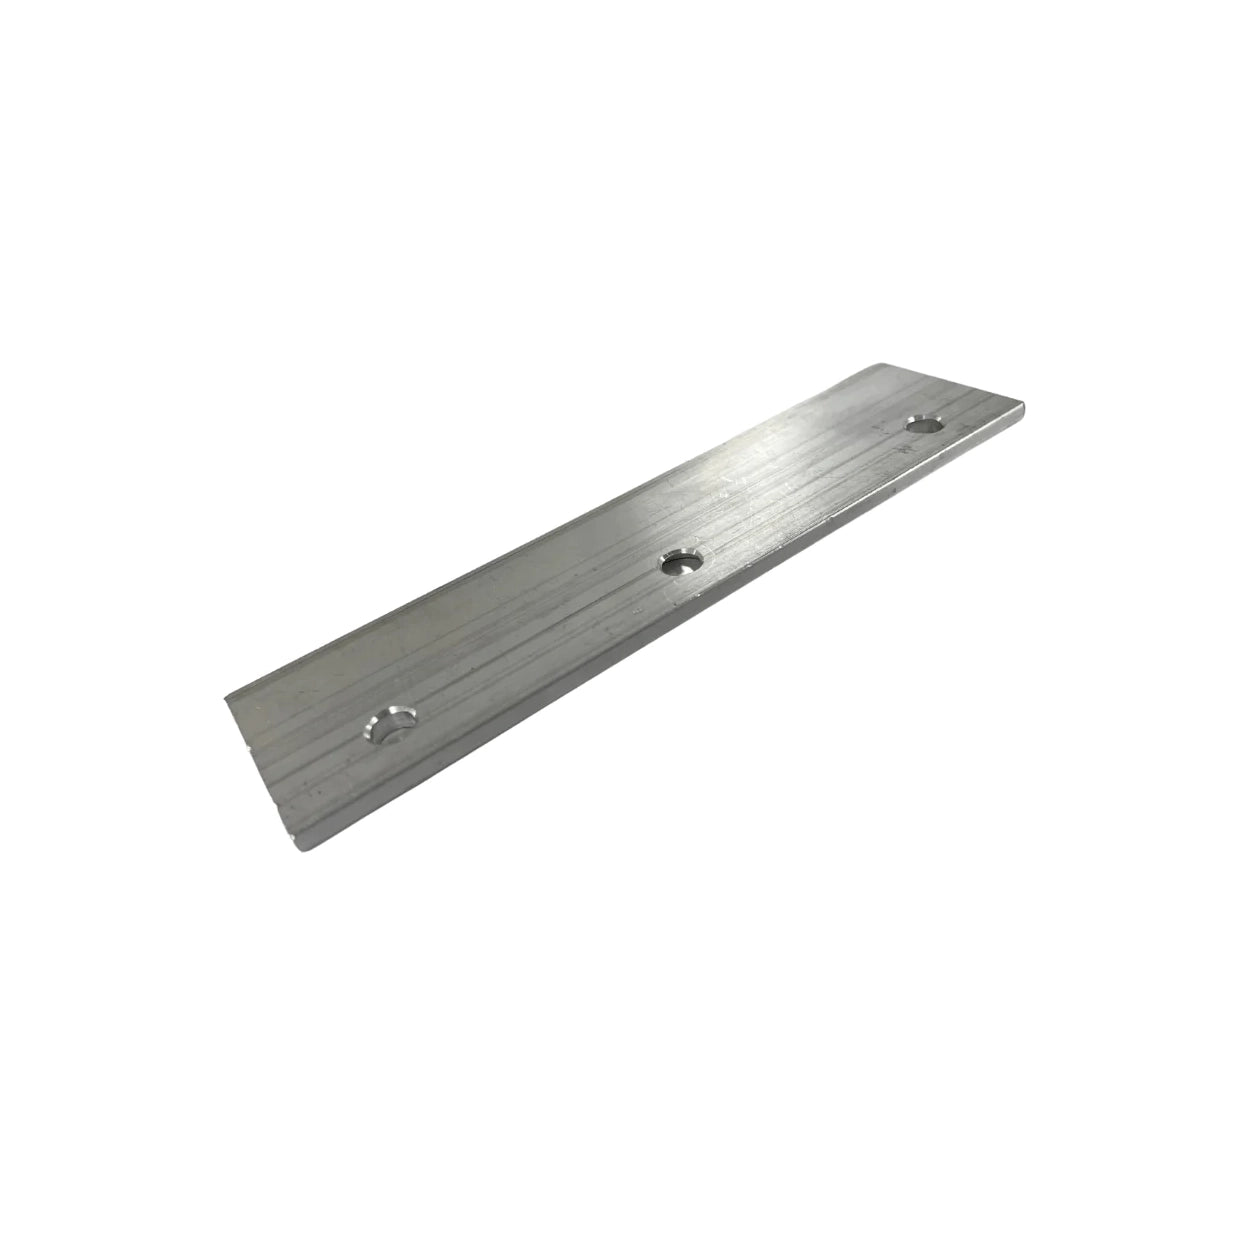 Universal Caster Plate Aluminum, #8483-A